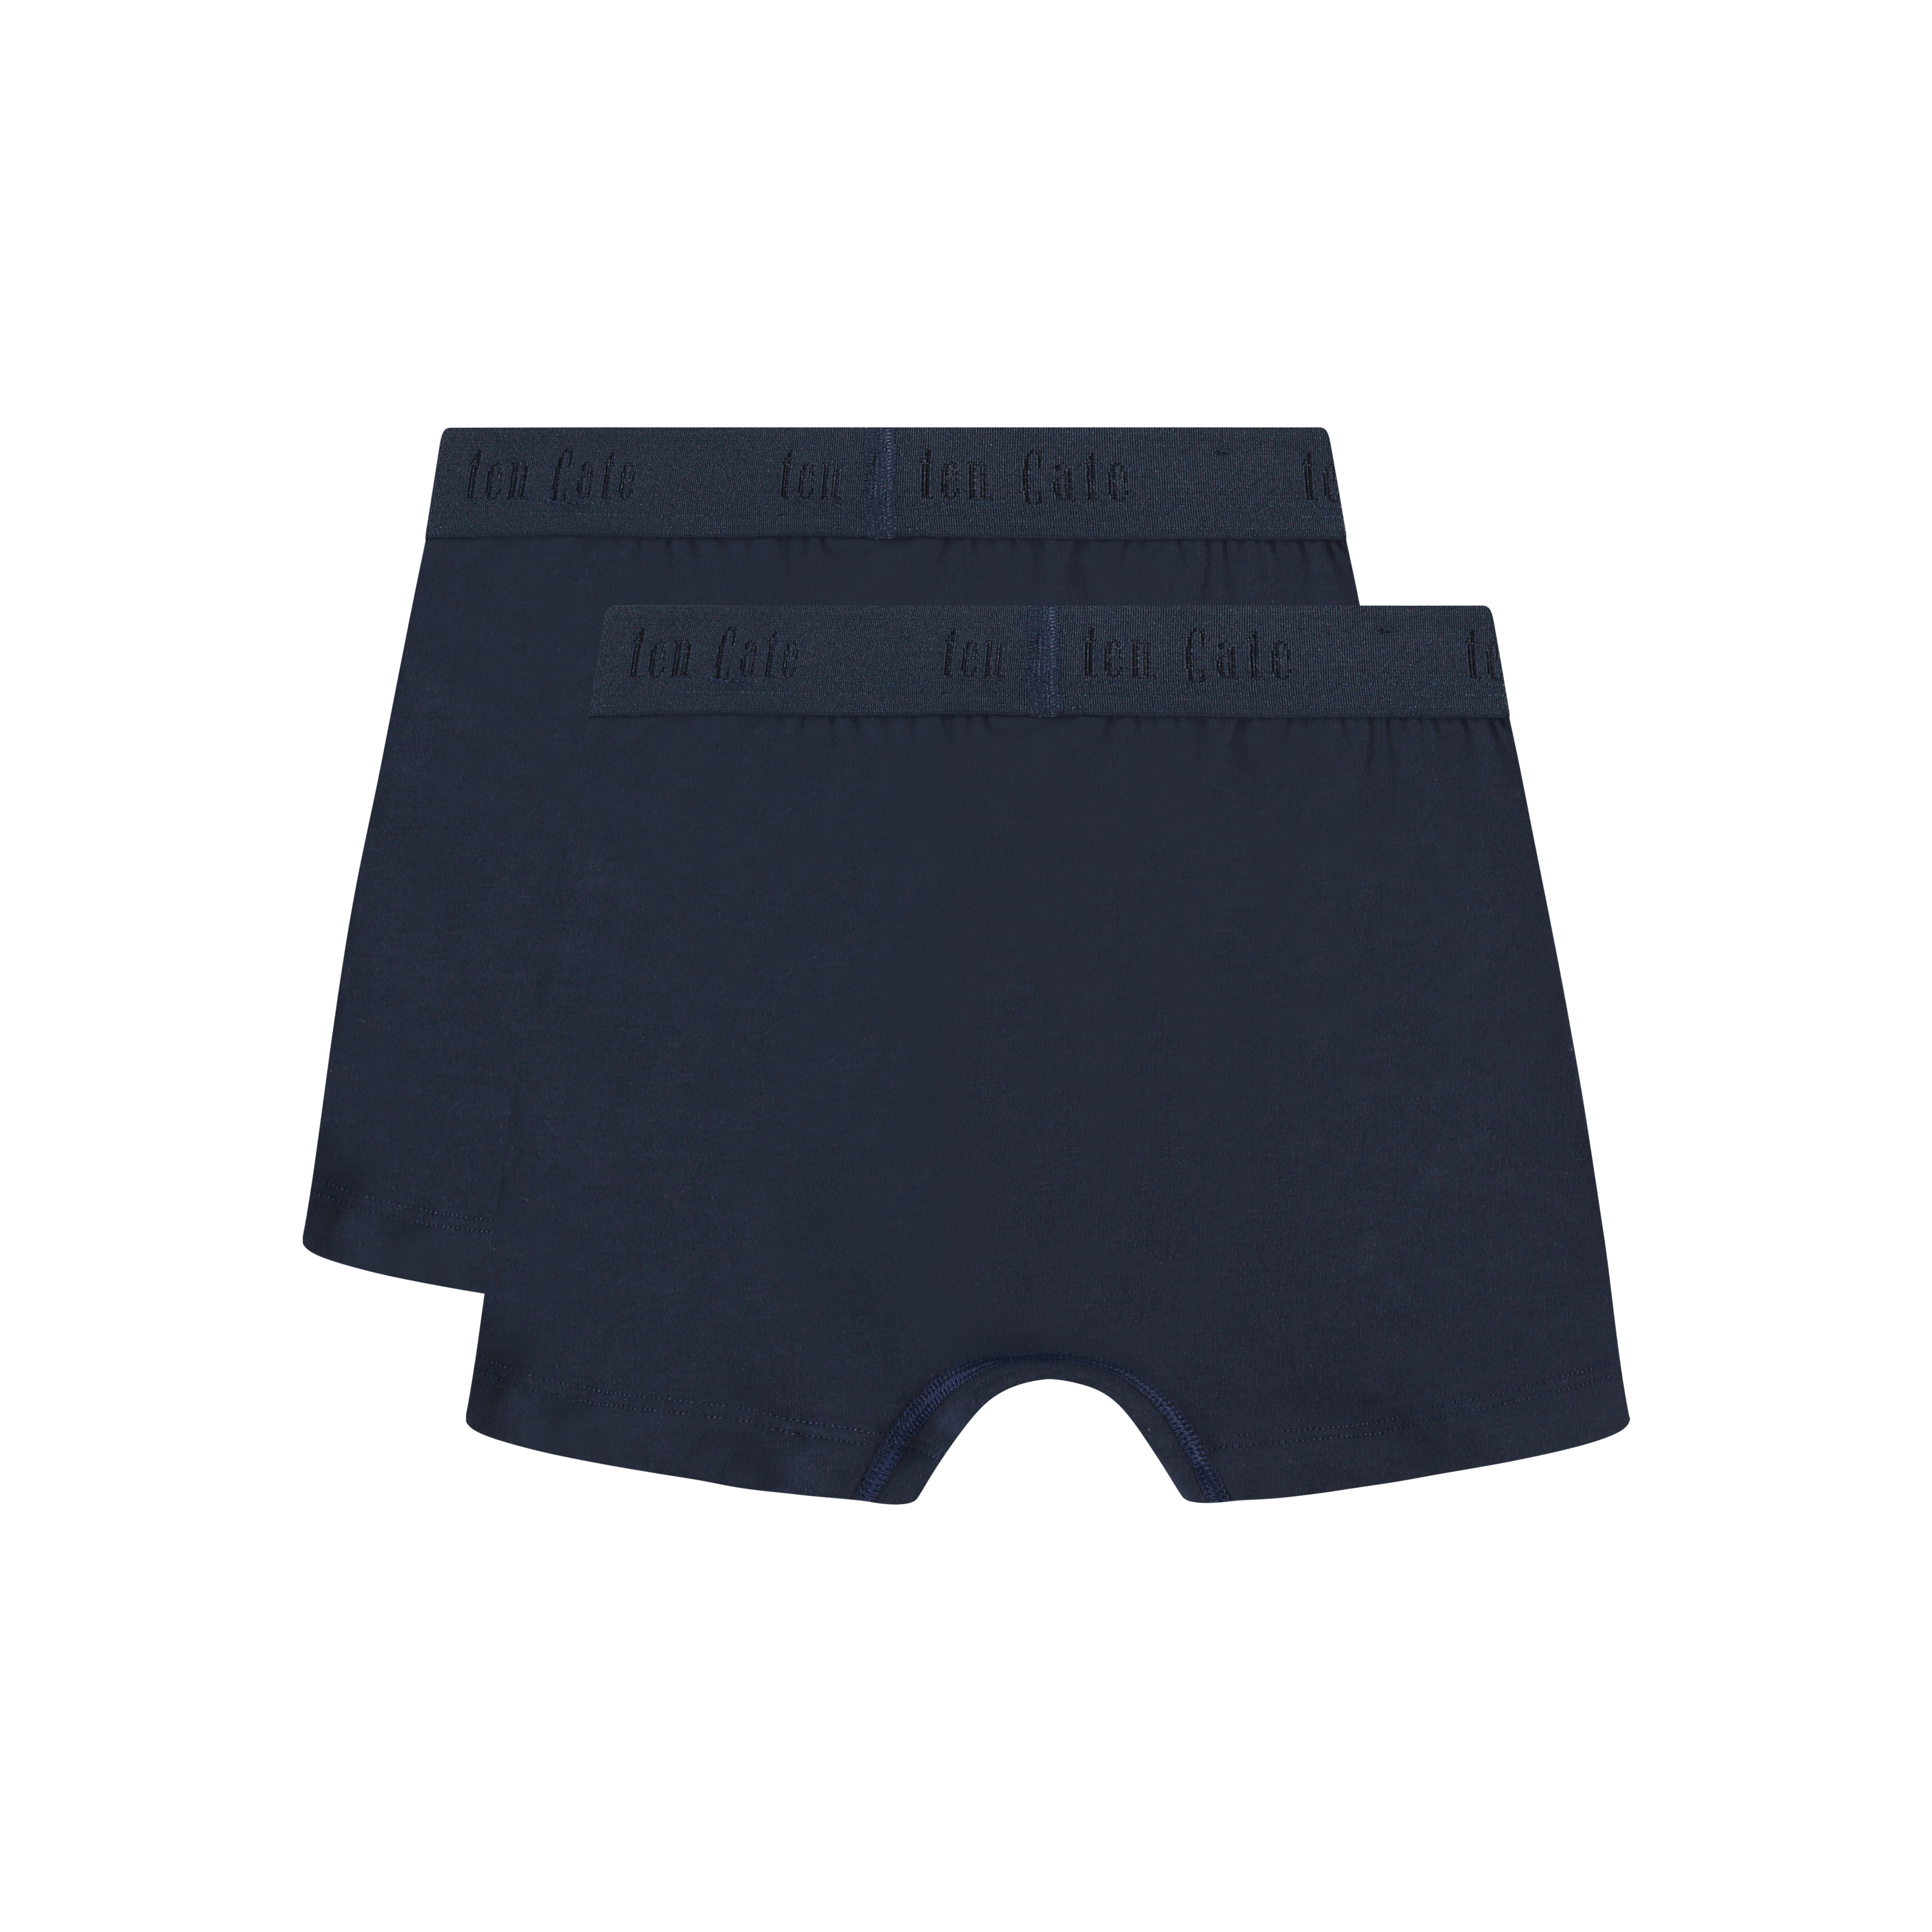 shorts navy 2 pack